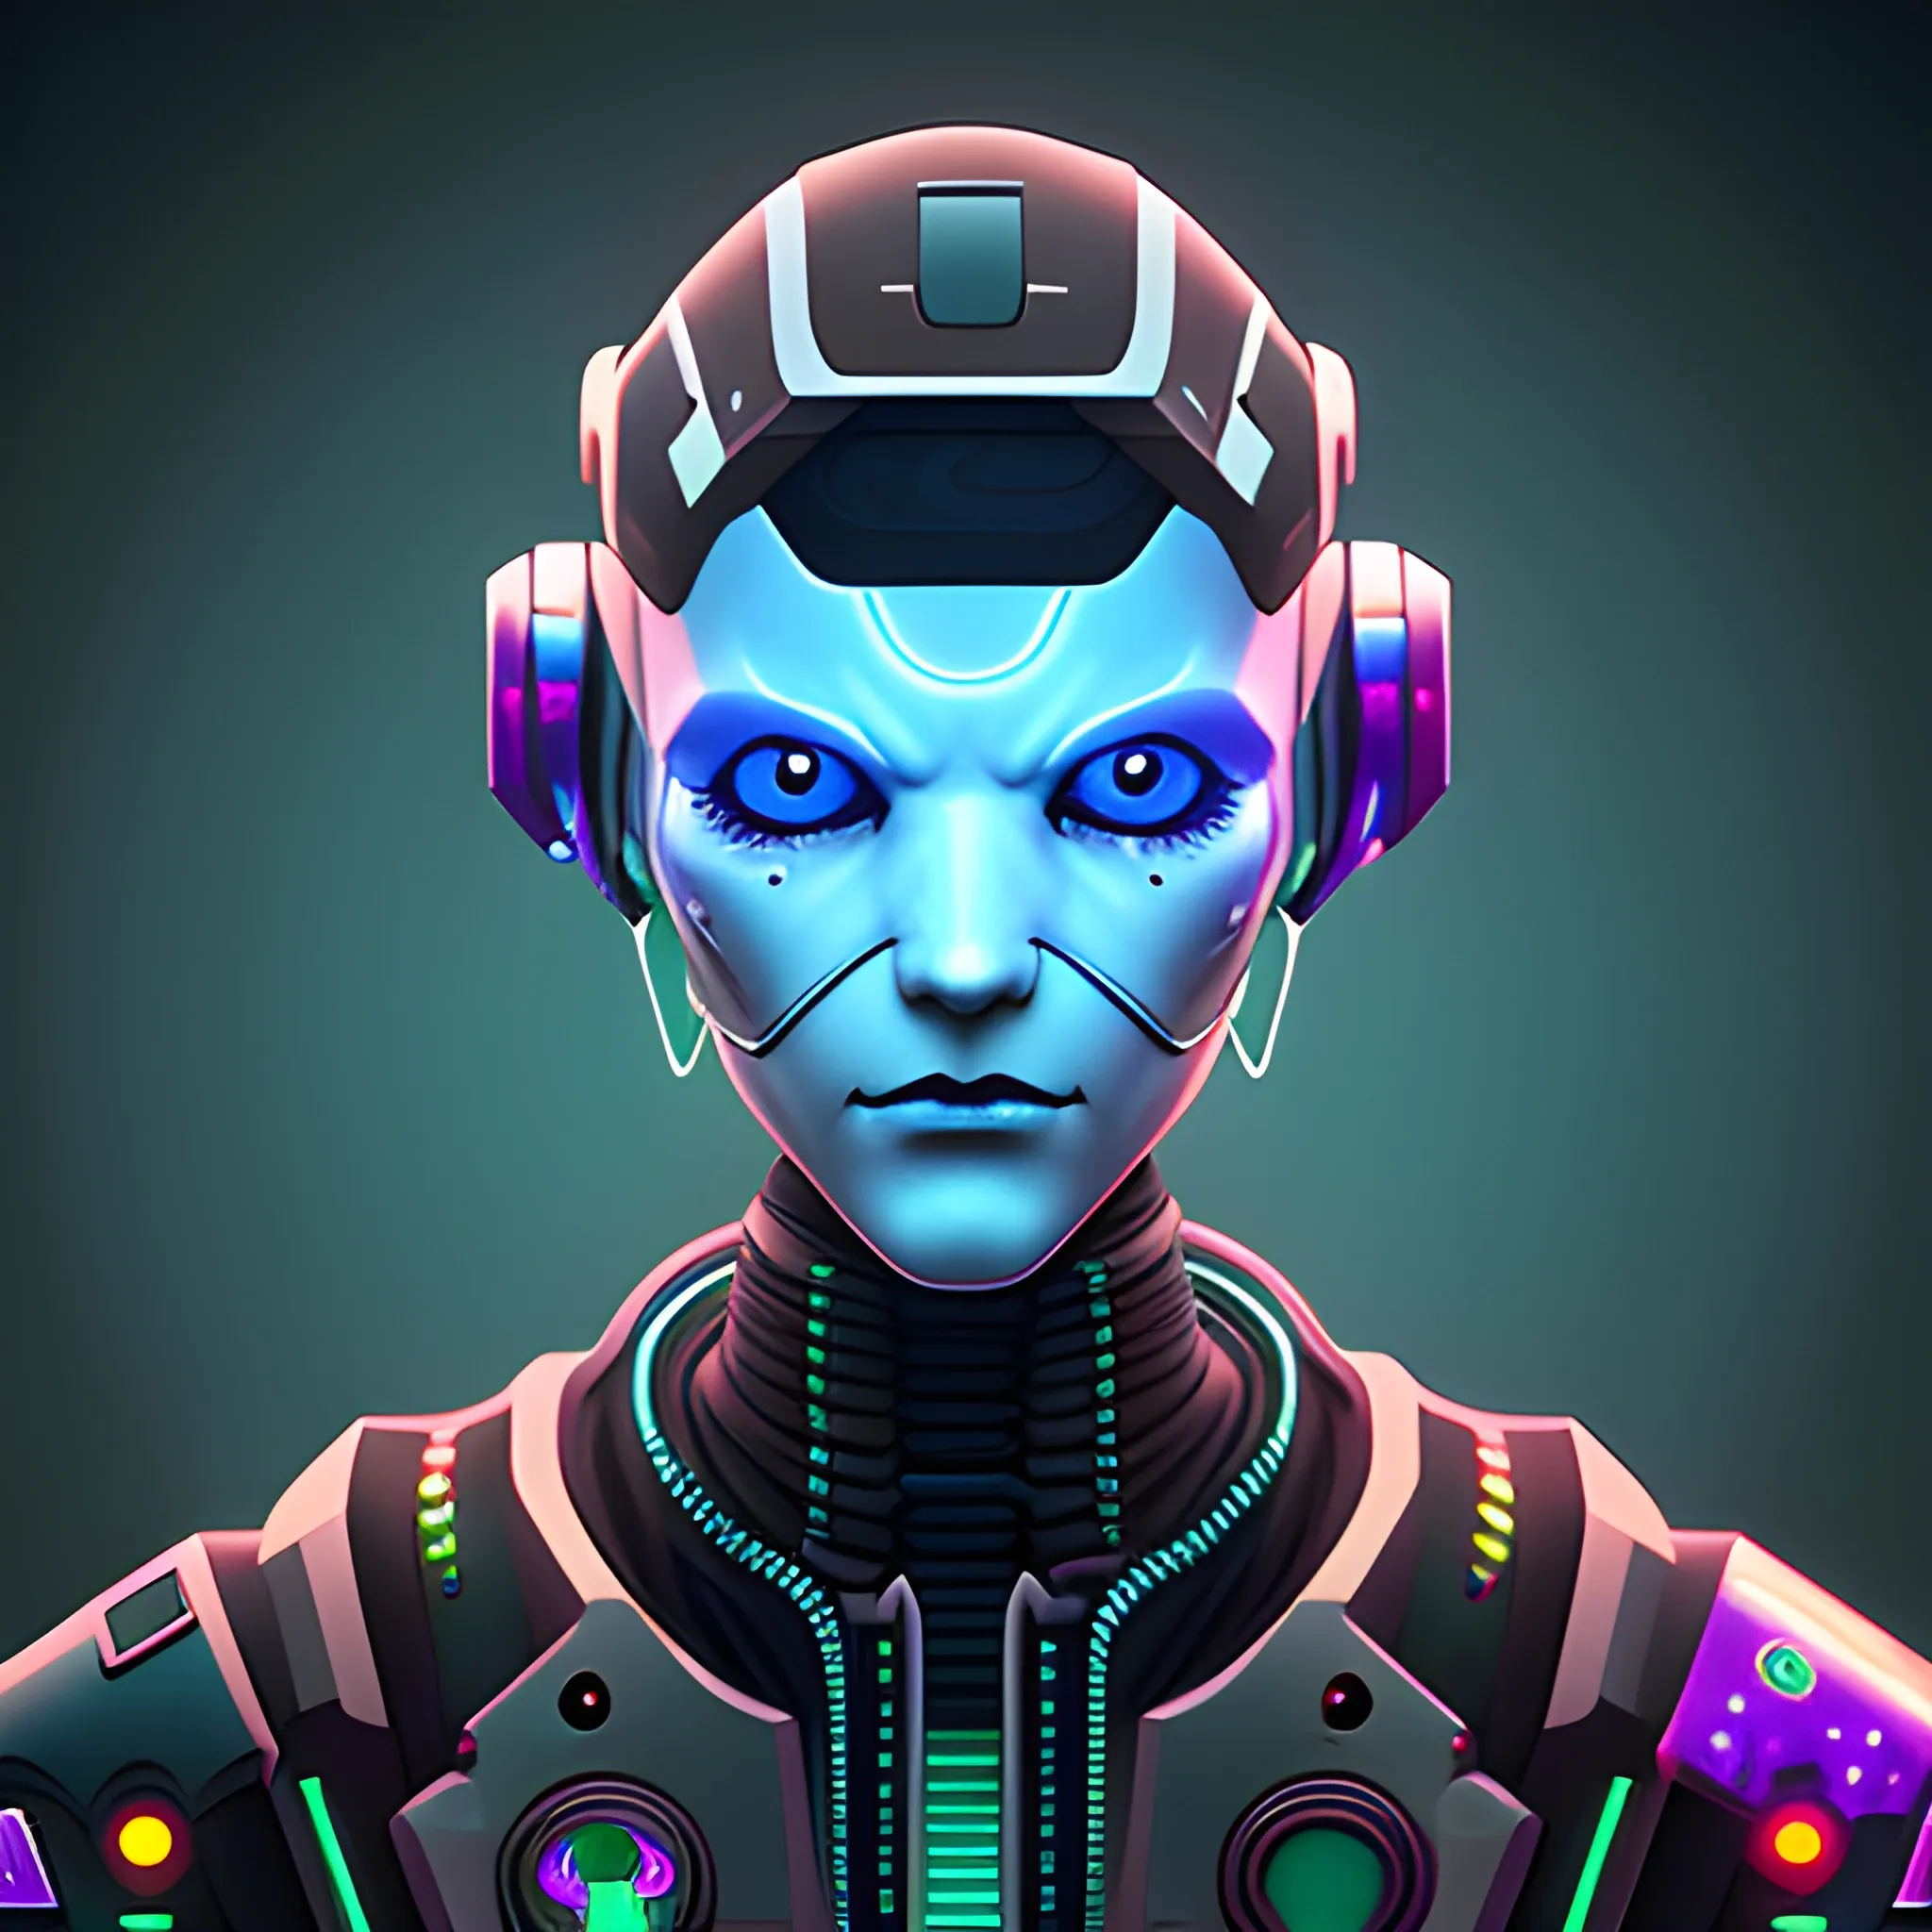 Cyberpunk style robot avatar, digital style, high quality